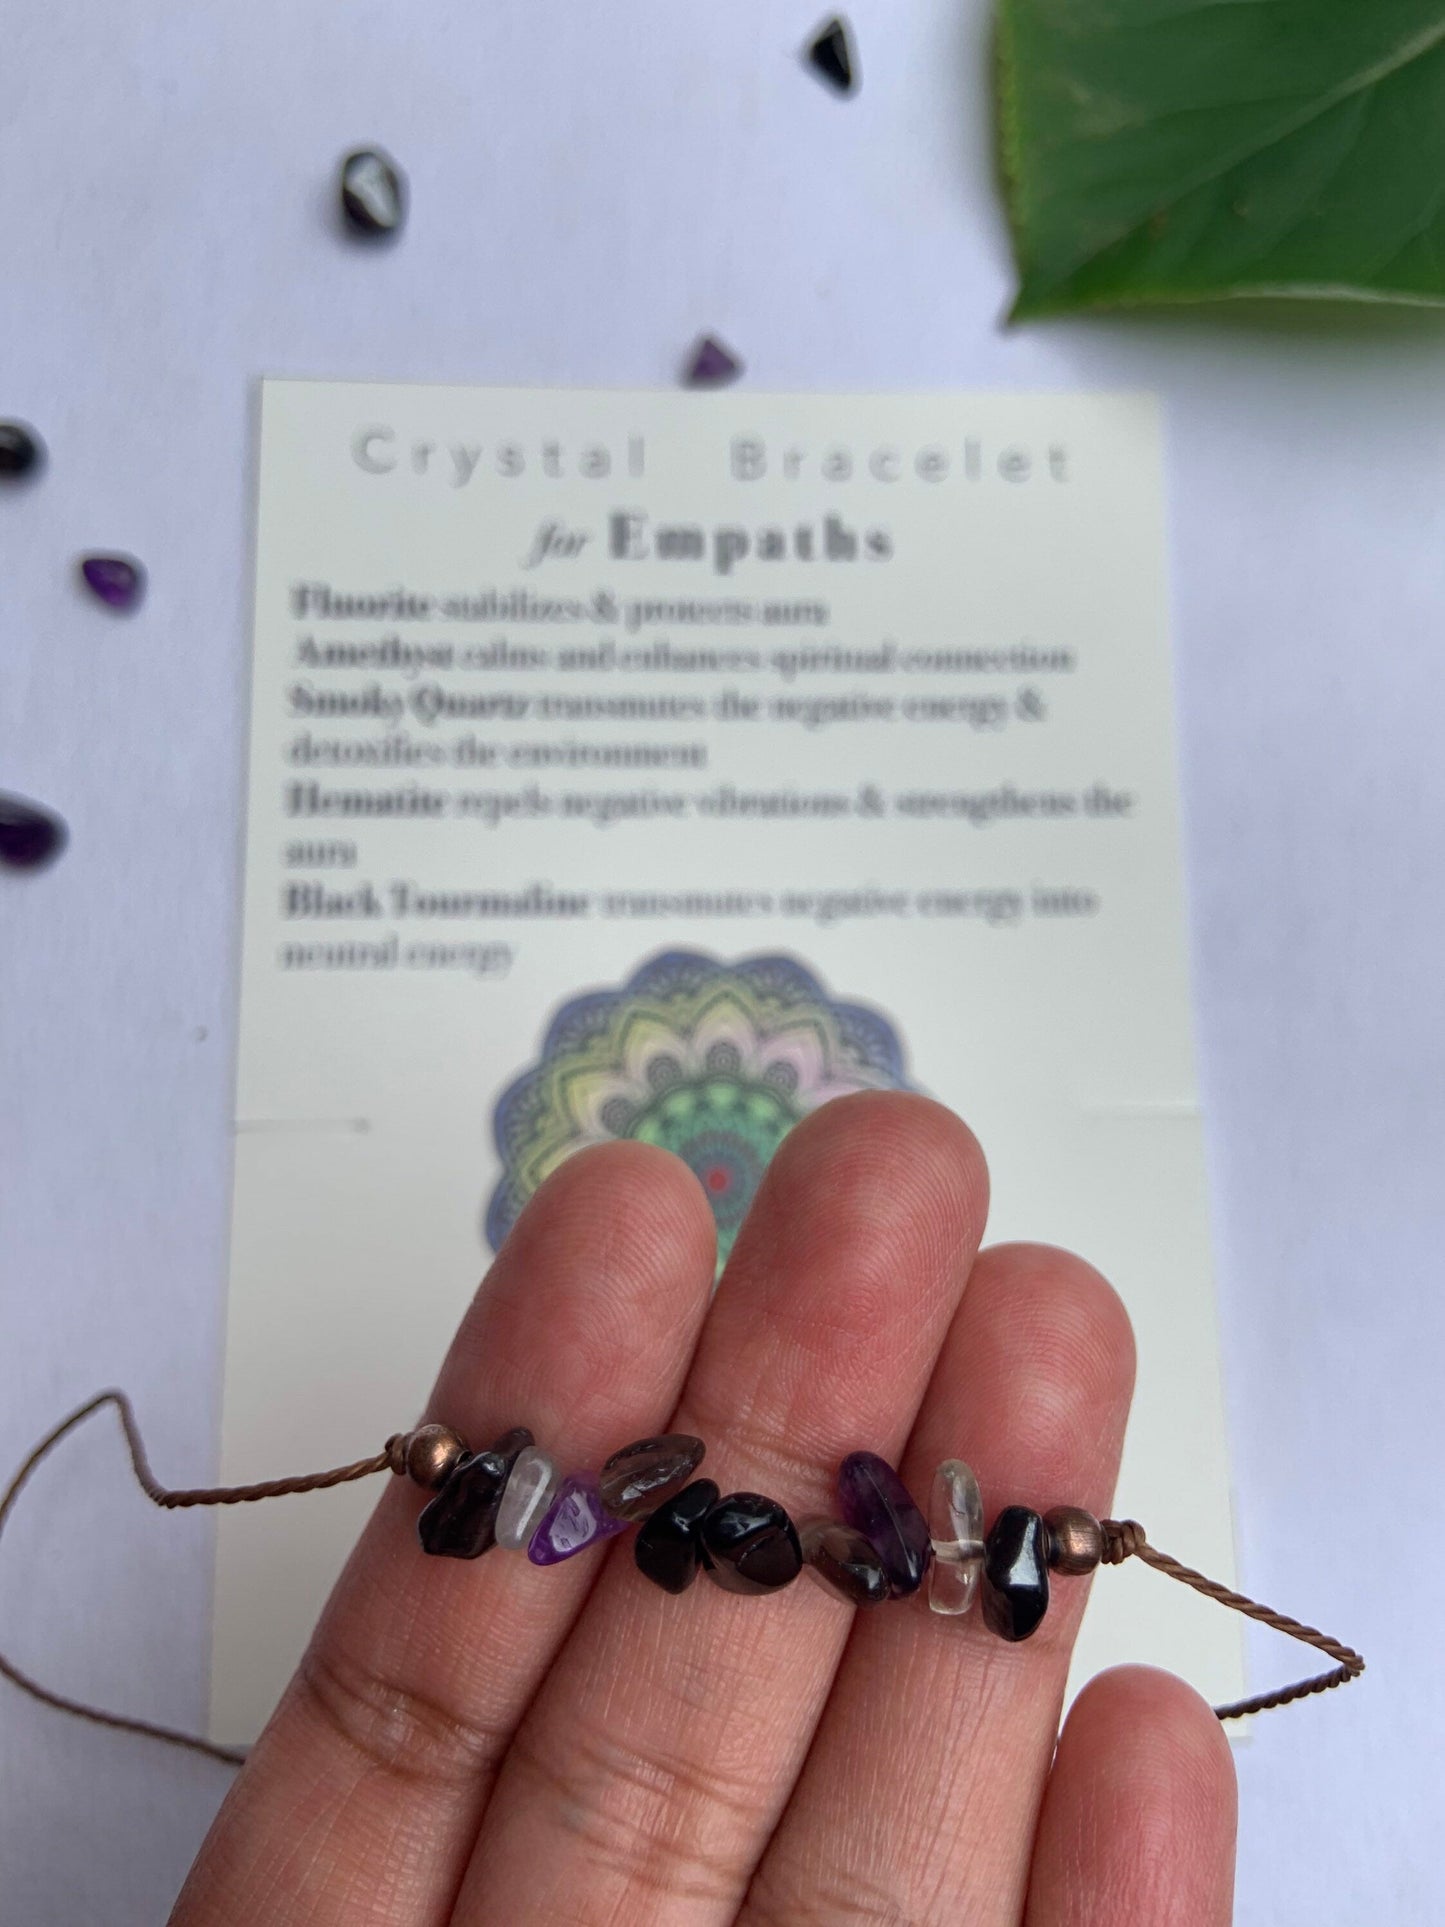 Empath crystal bracelet anklet boho, casual & minimal Tie closure